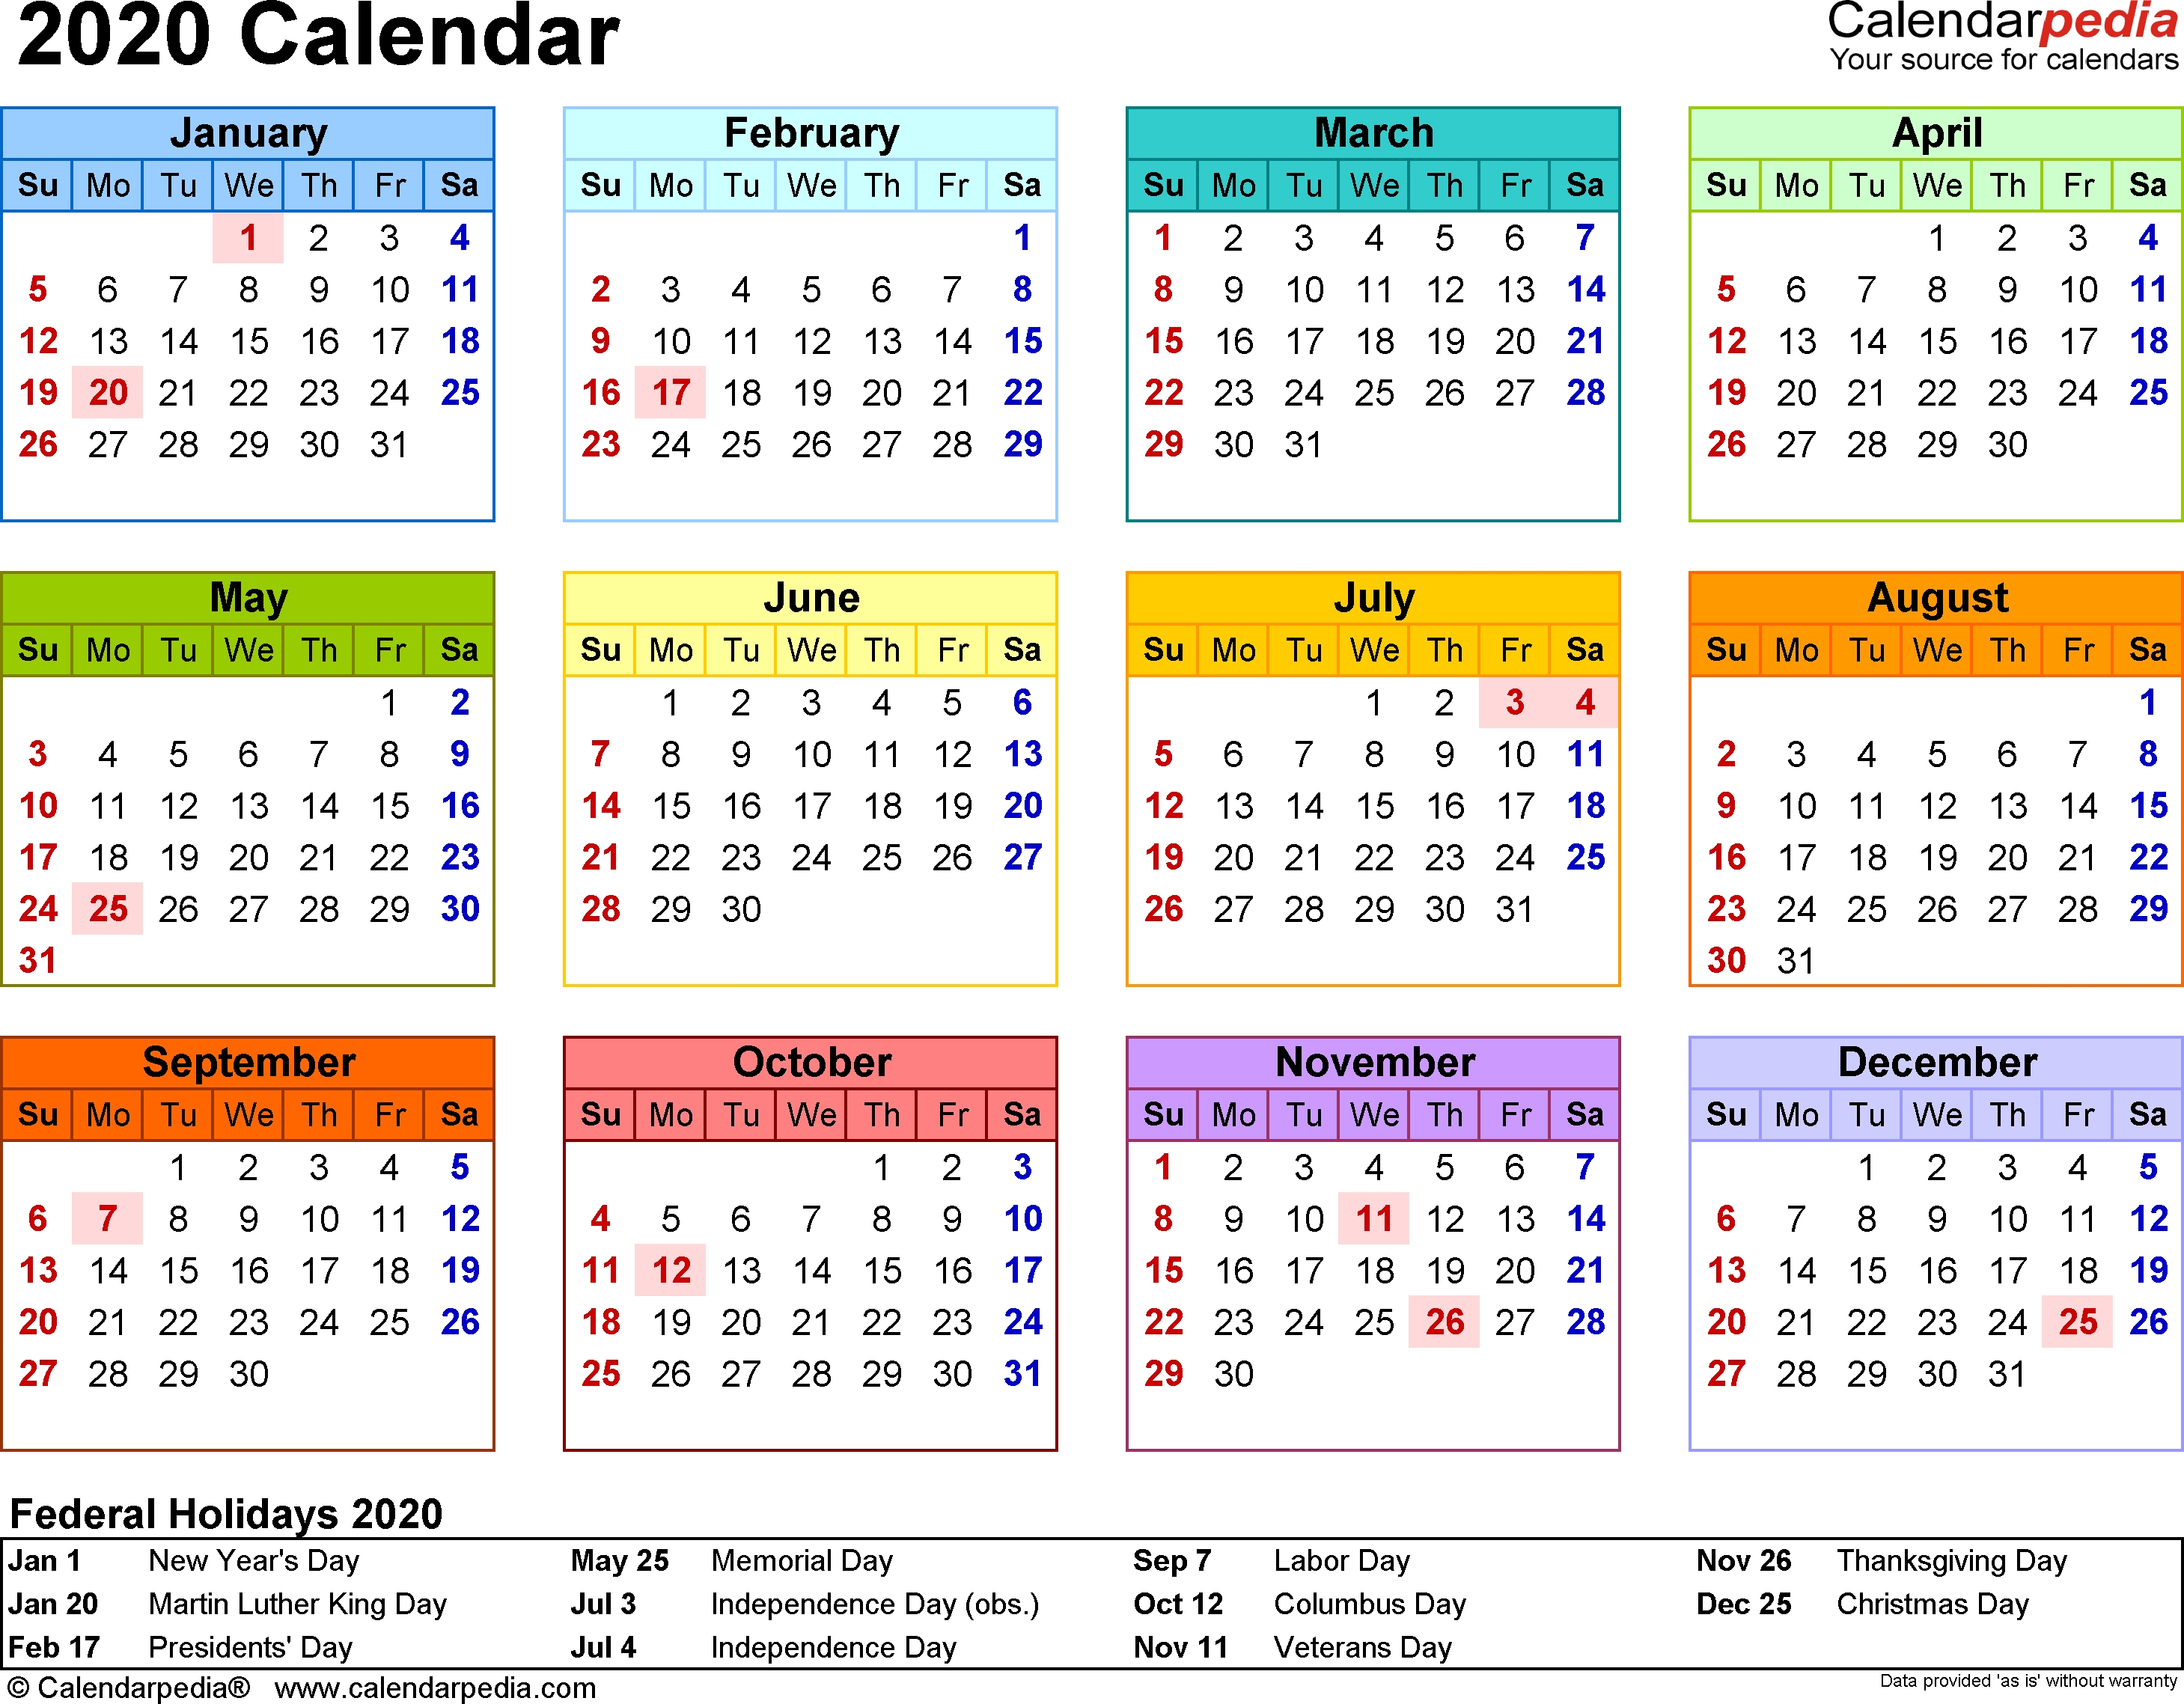 2020 Calendar - Free Printable Microsoft Word Templates Remarkable Calendar 2020 Printable Microsoft Word